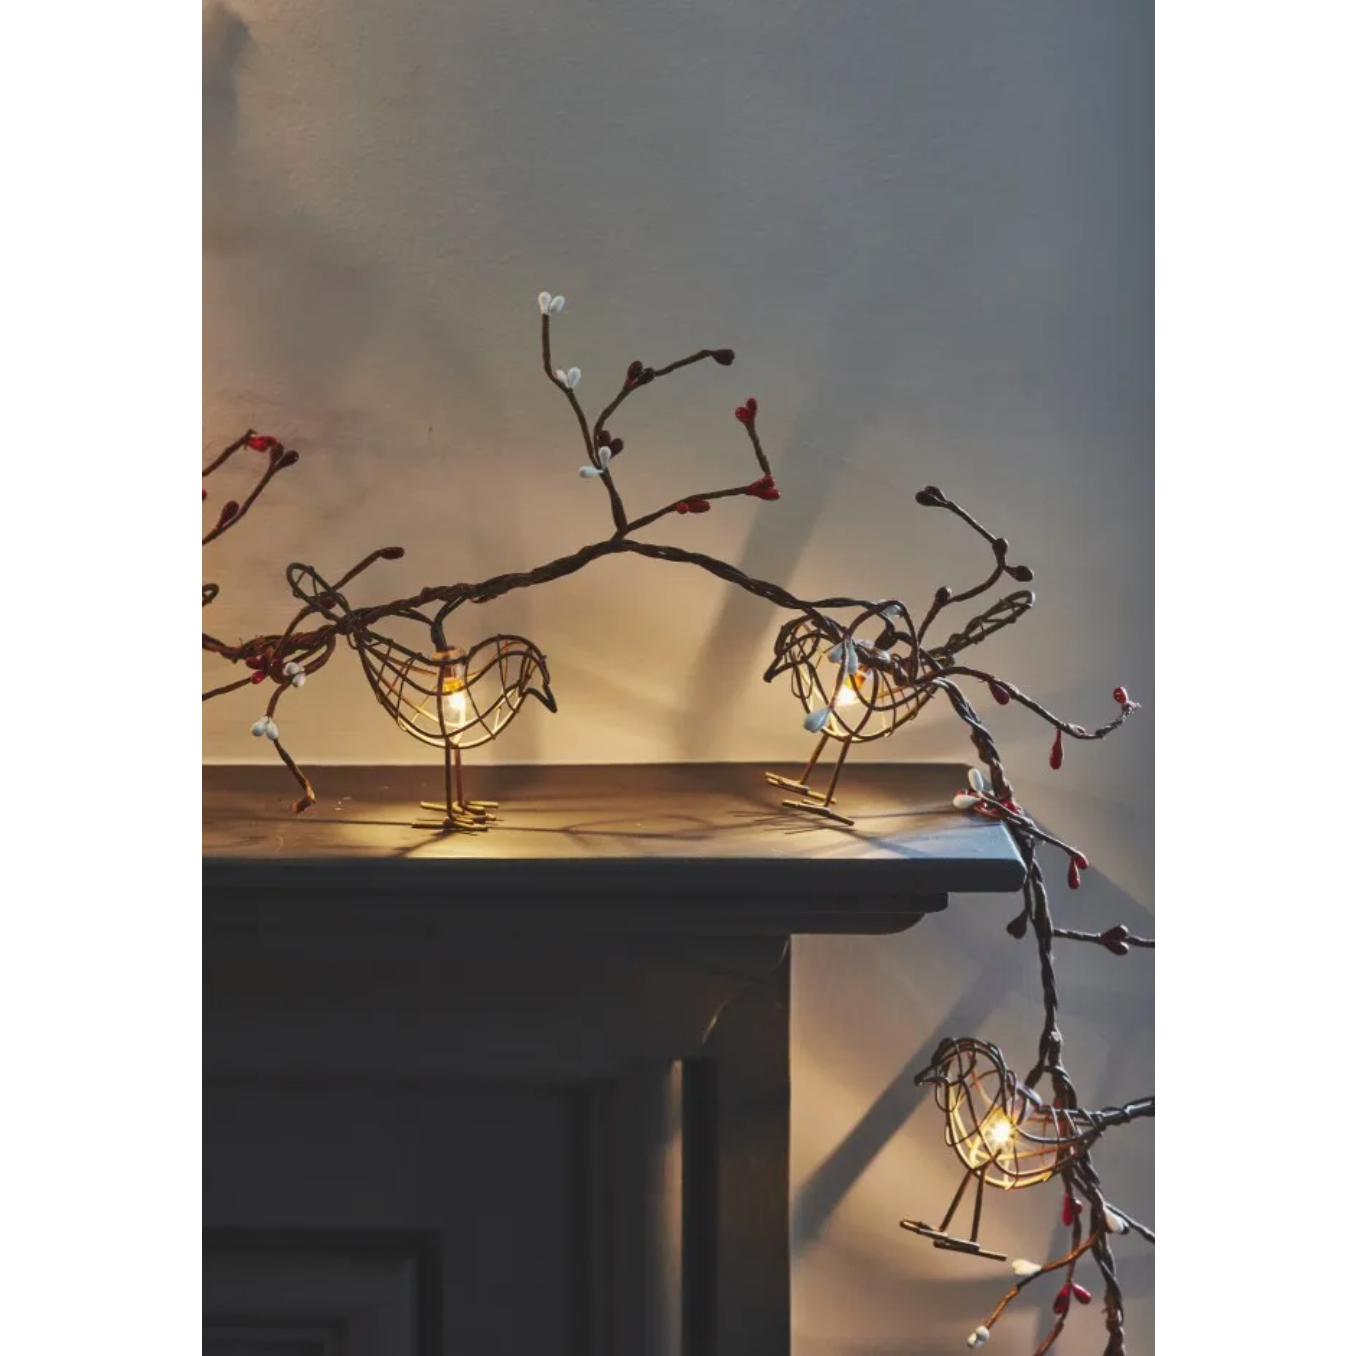 Winter Robin Chain Lights - Elaborate Festive String